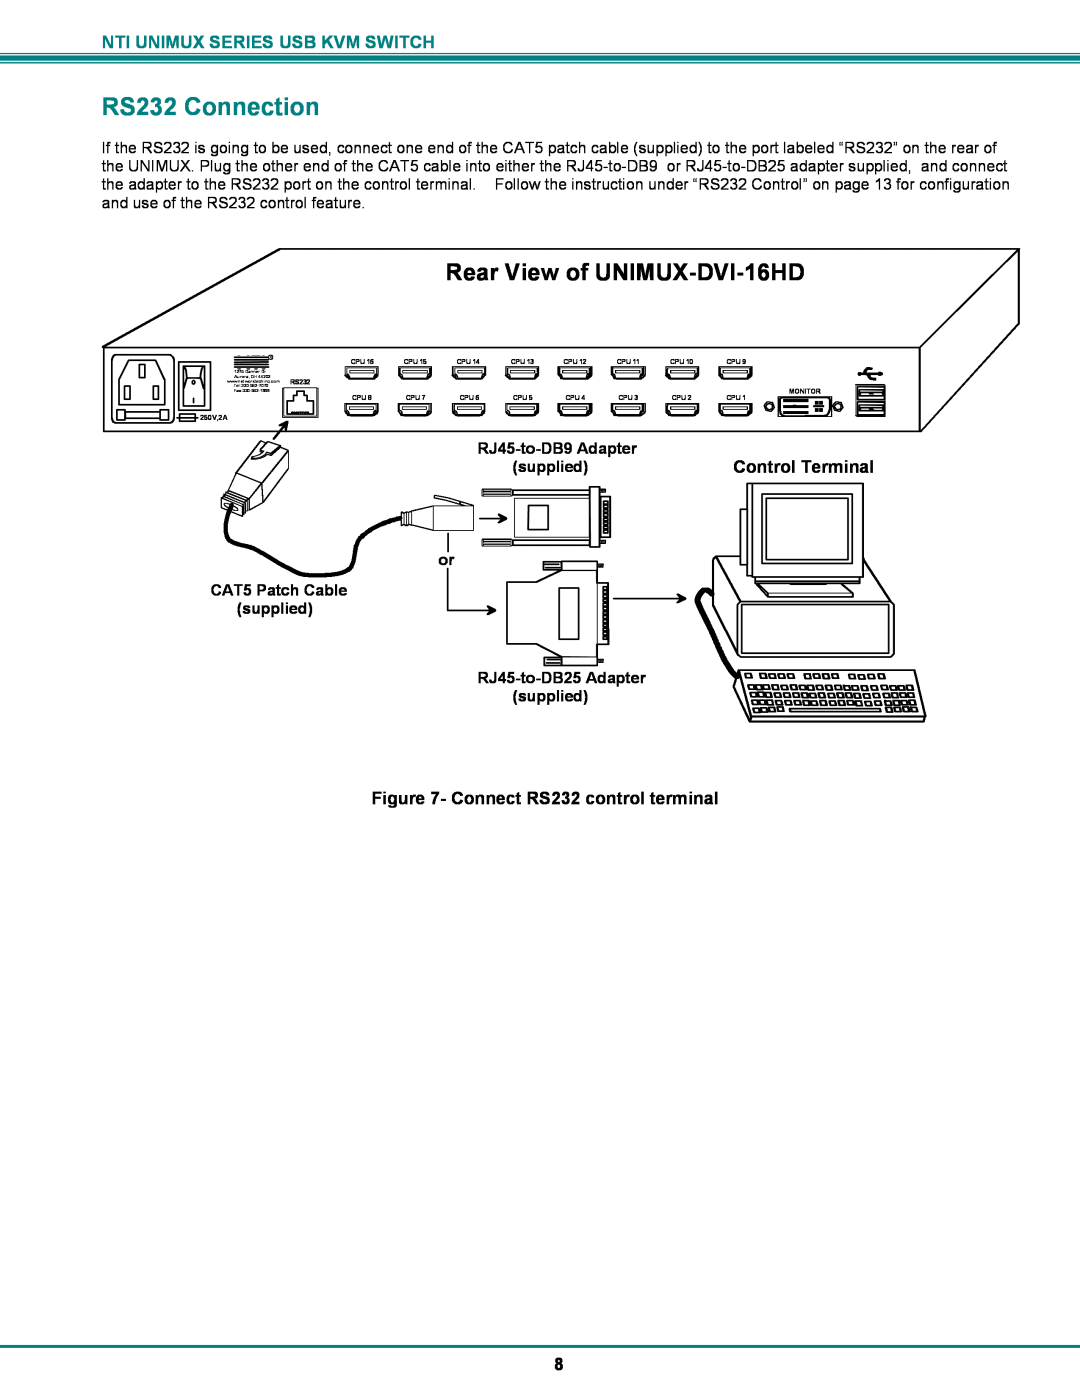 Network Technologies UNIMUX-DVI-xHD RS232 Connection, Connect RS232 control terminal, Rear View of UNIMUX-DVI-16HD 